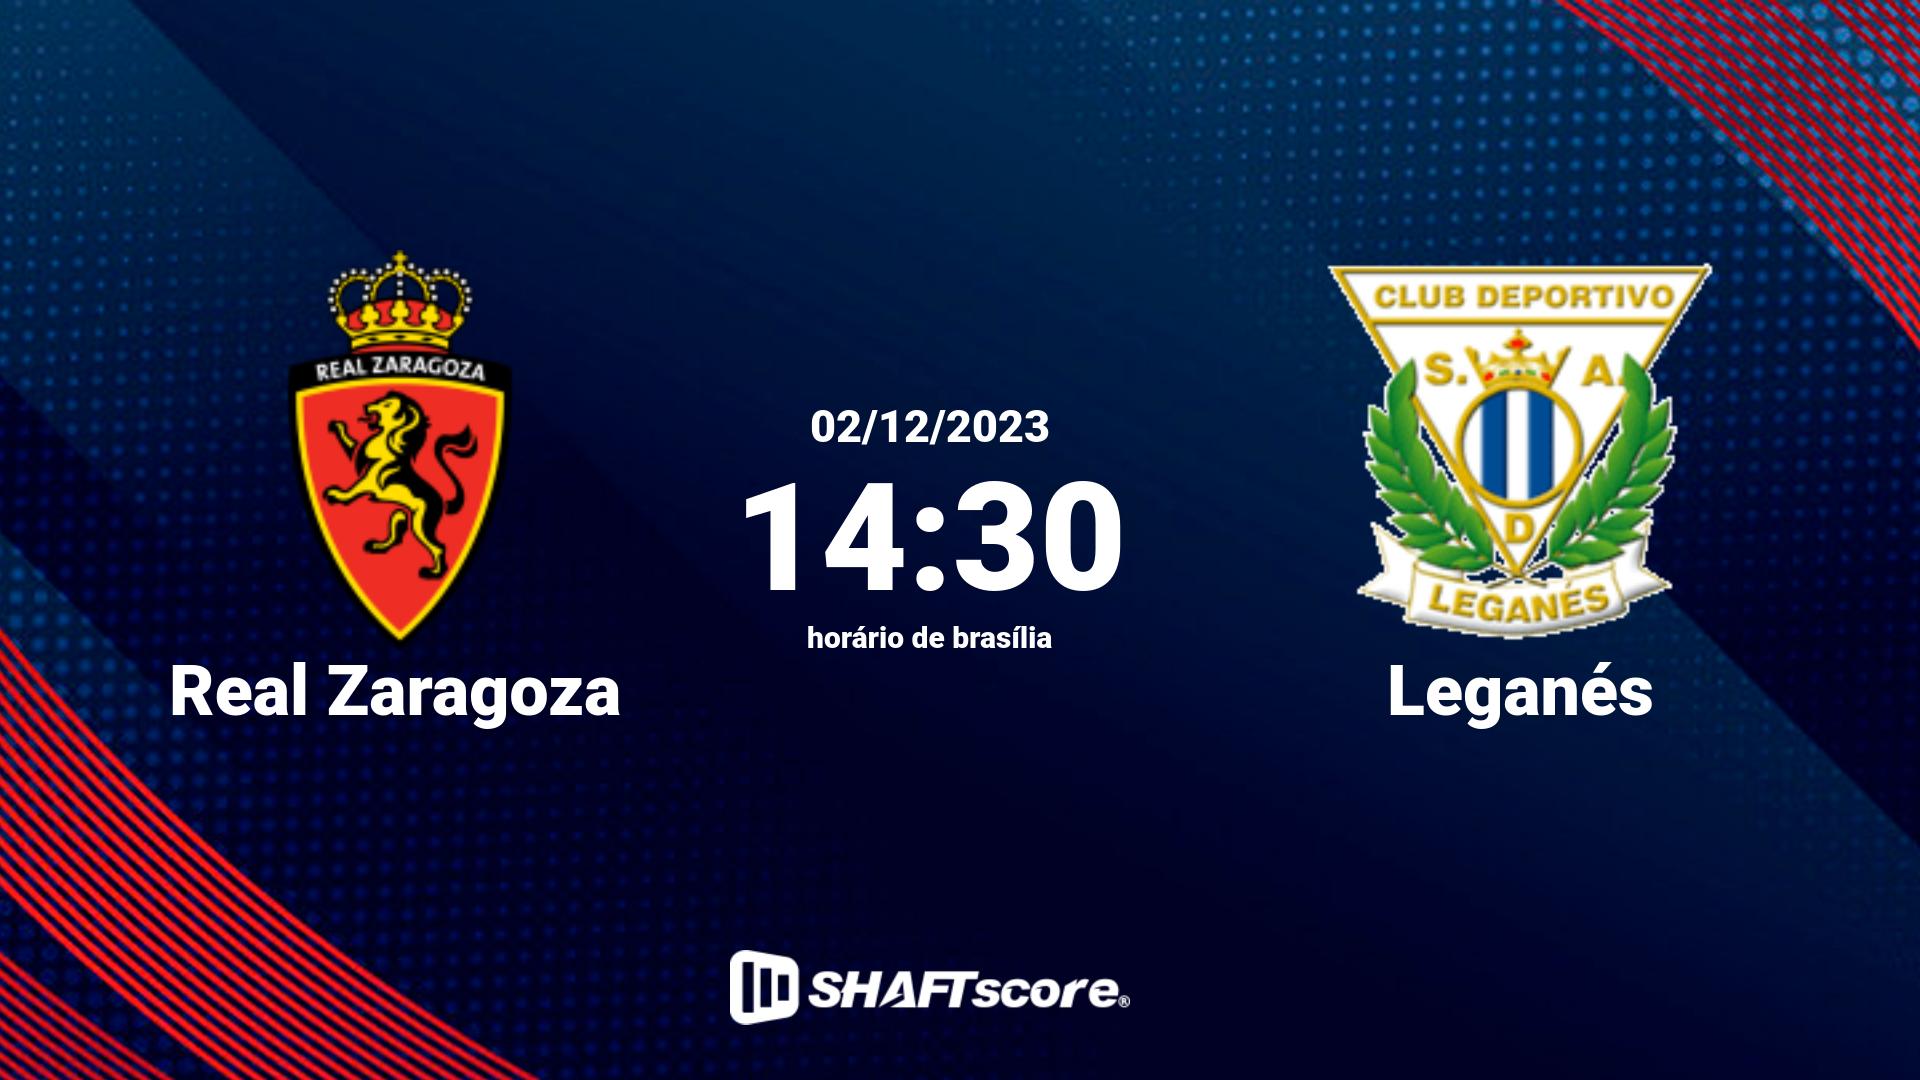 Estatísticas do jogo Real Zaragoza vs Leganés 02.12 14:30